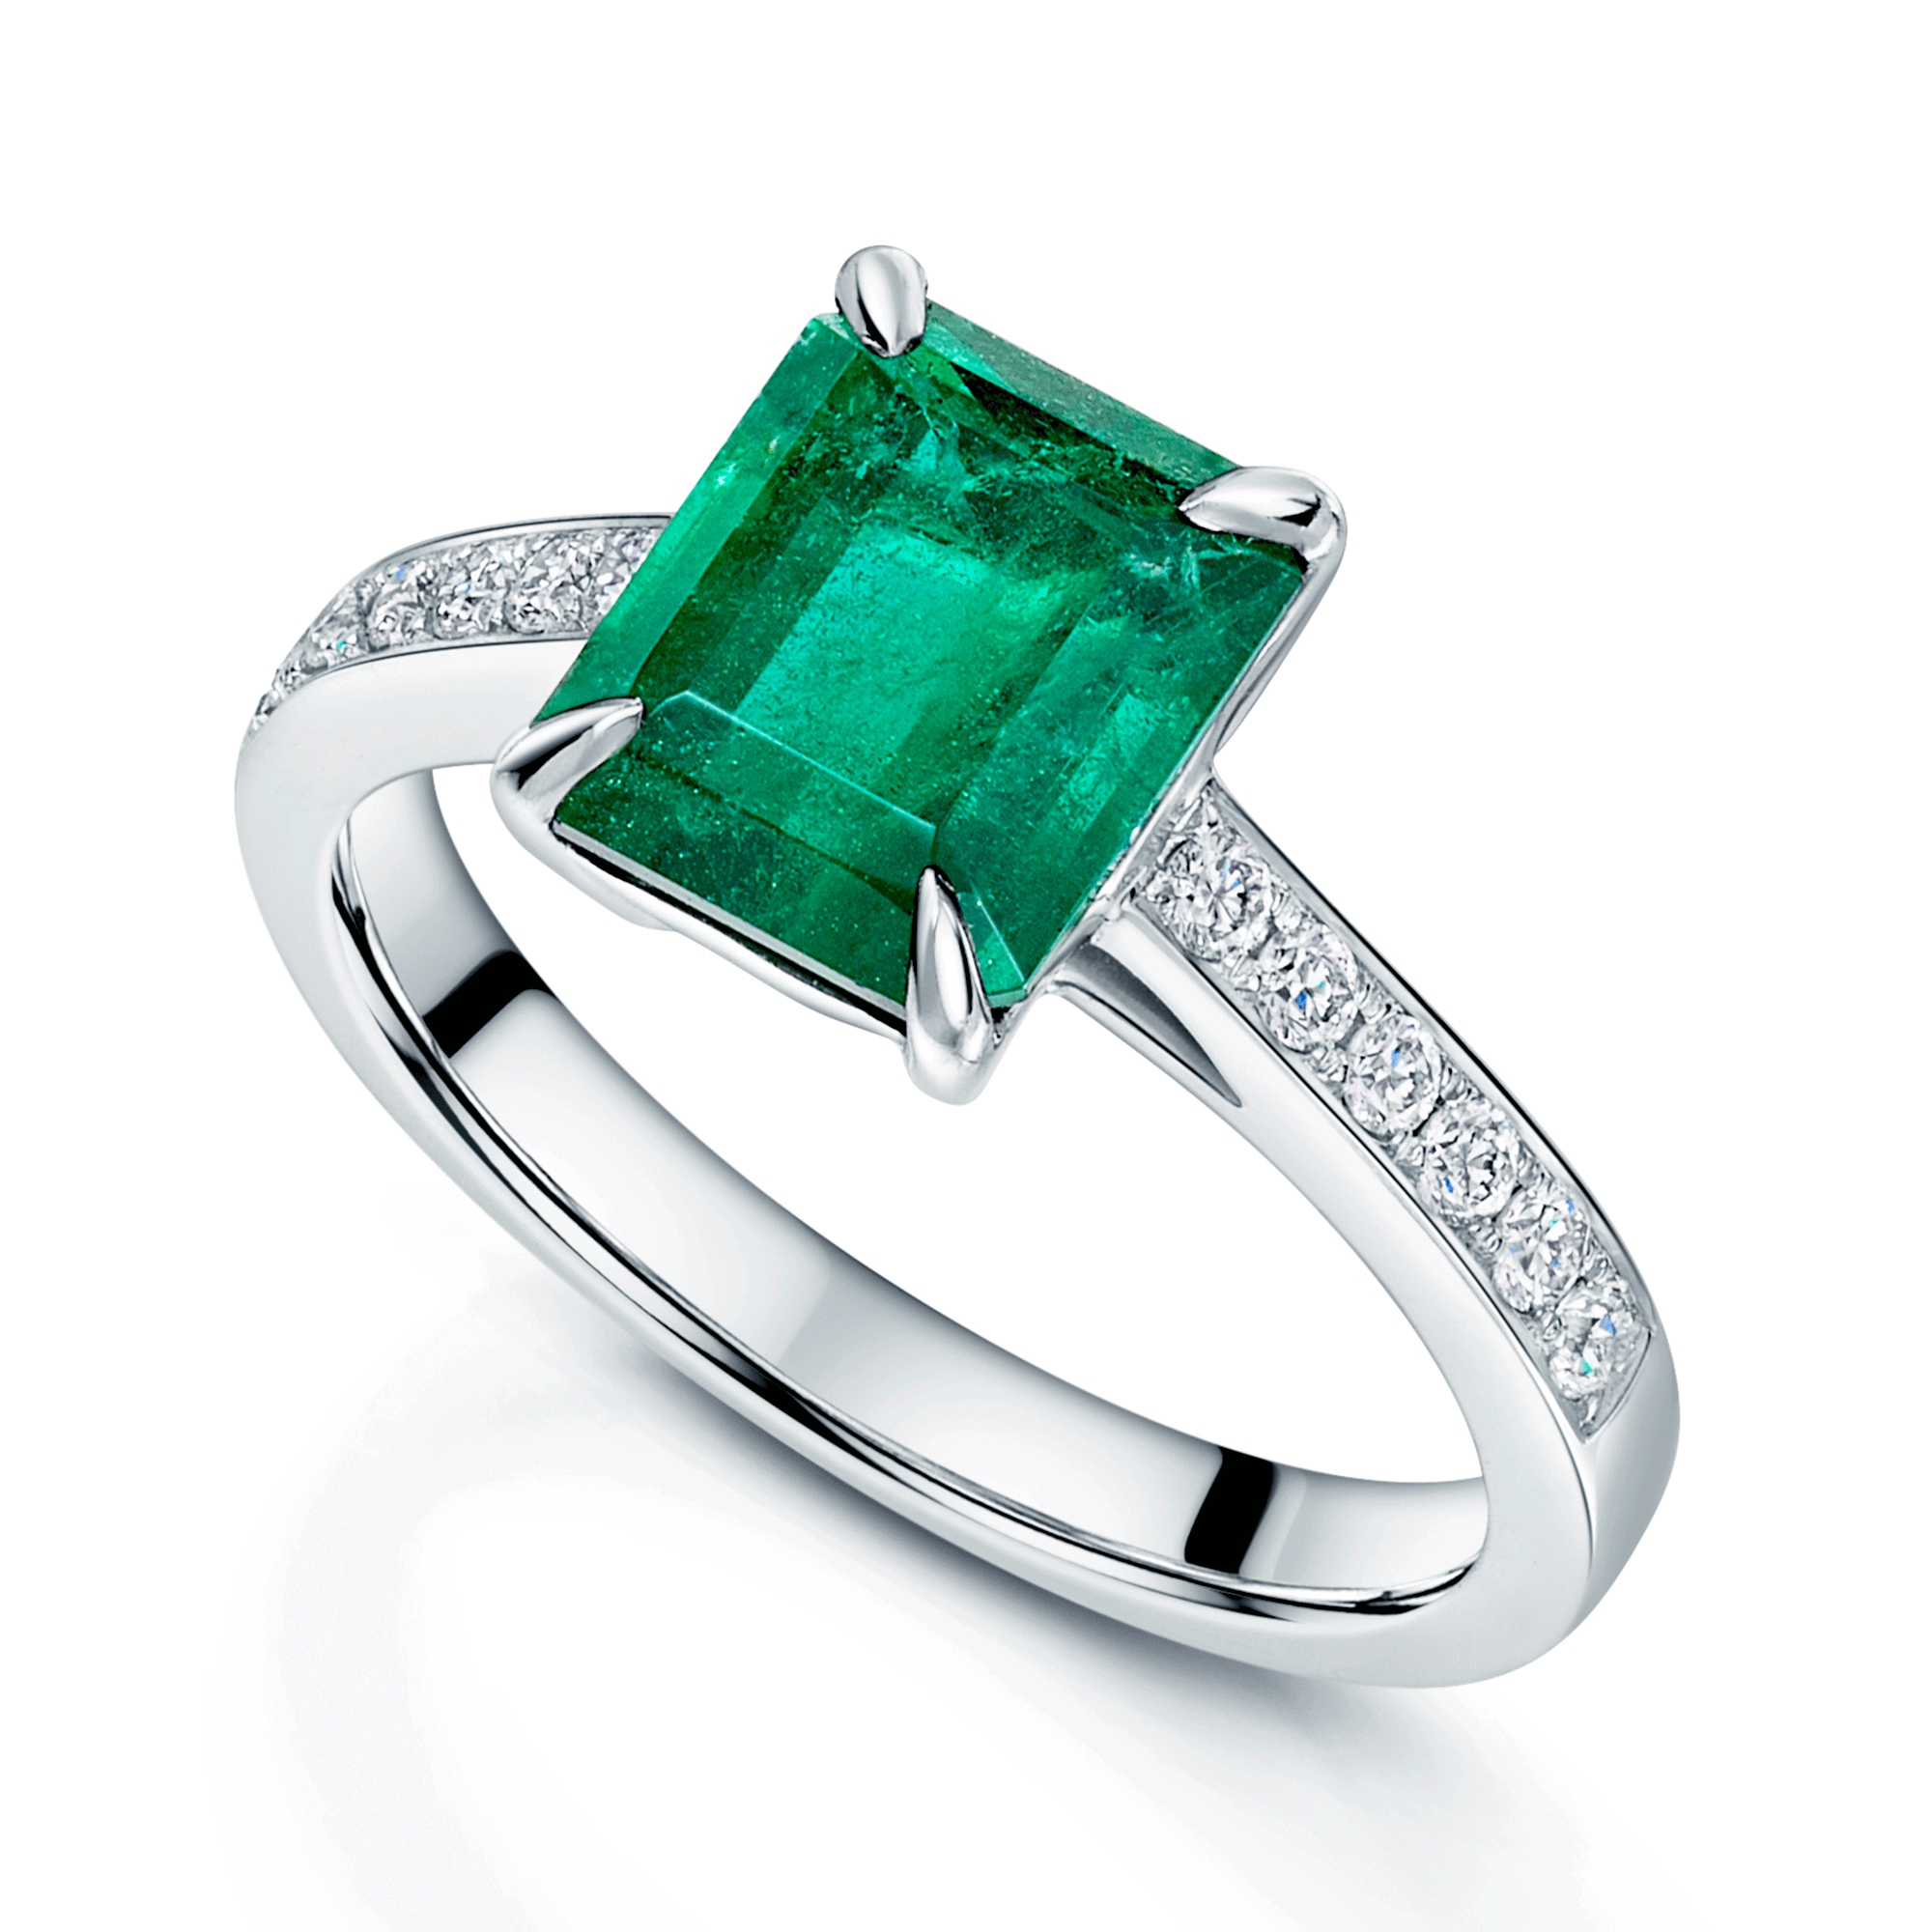 Platinum Emerald Cut Emerald Ring With Diamond Shoulders.